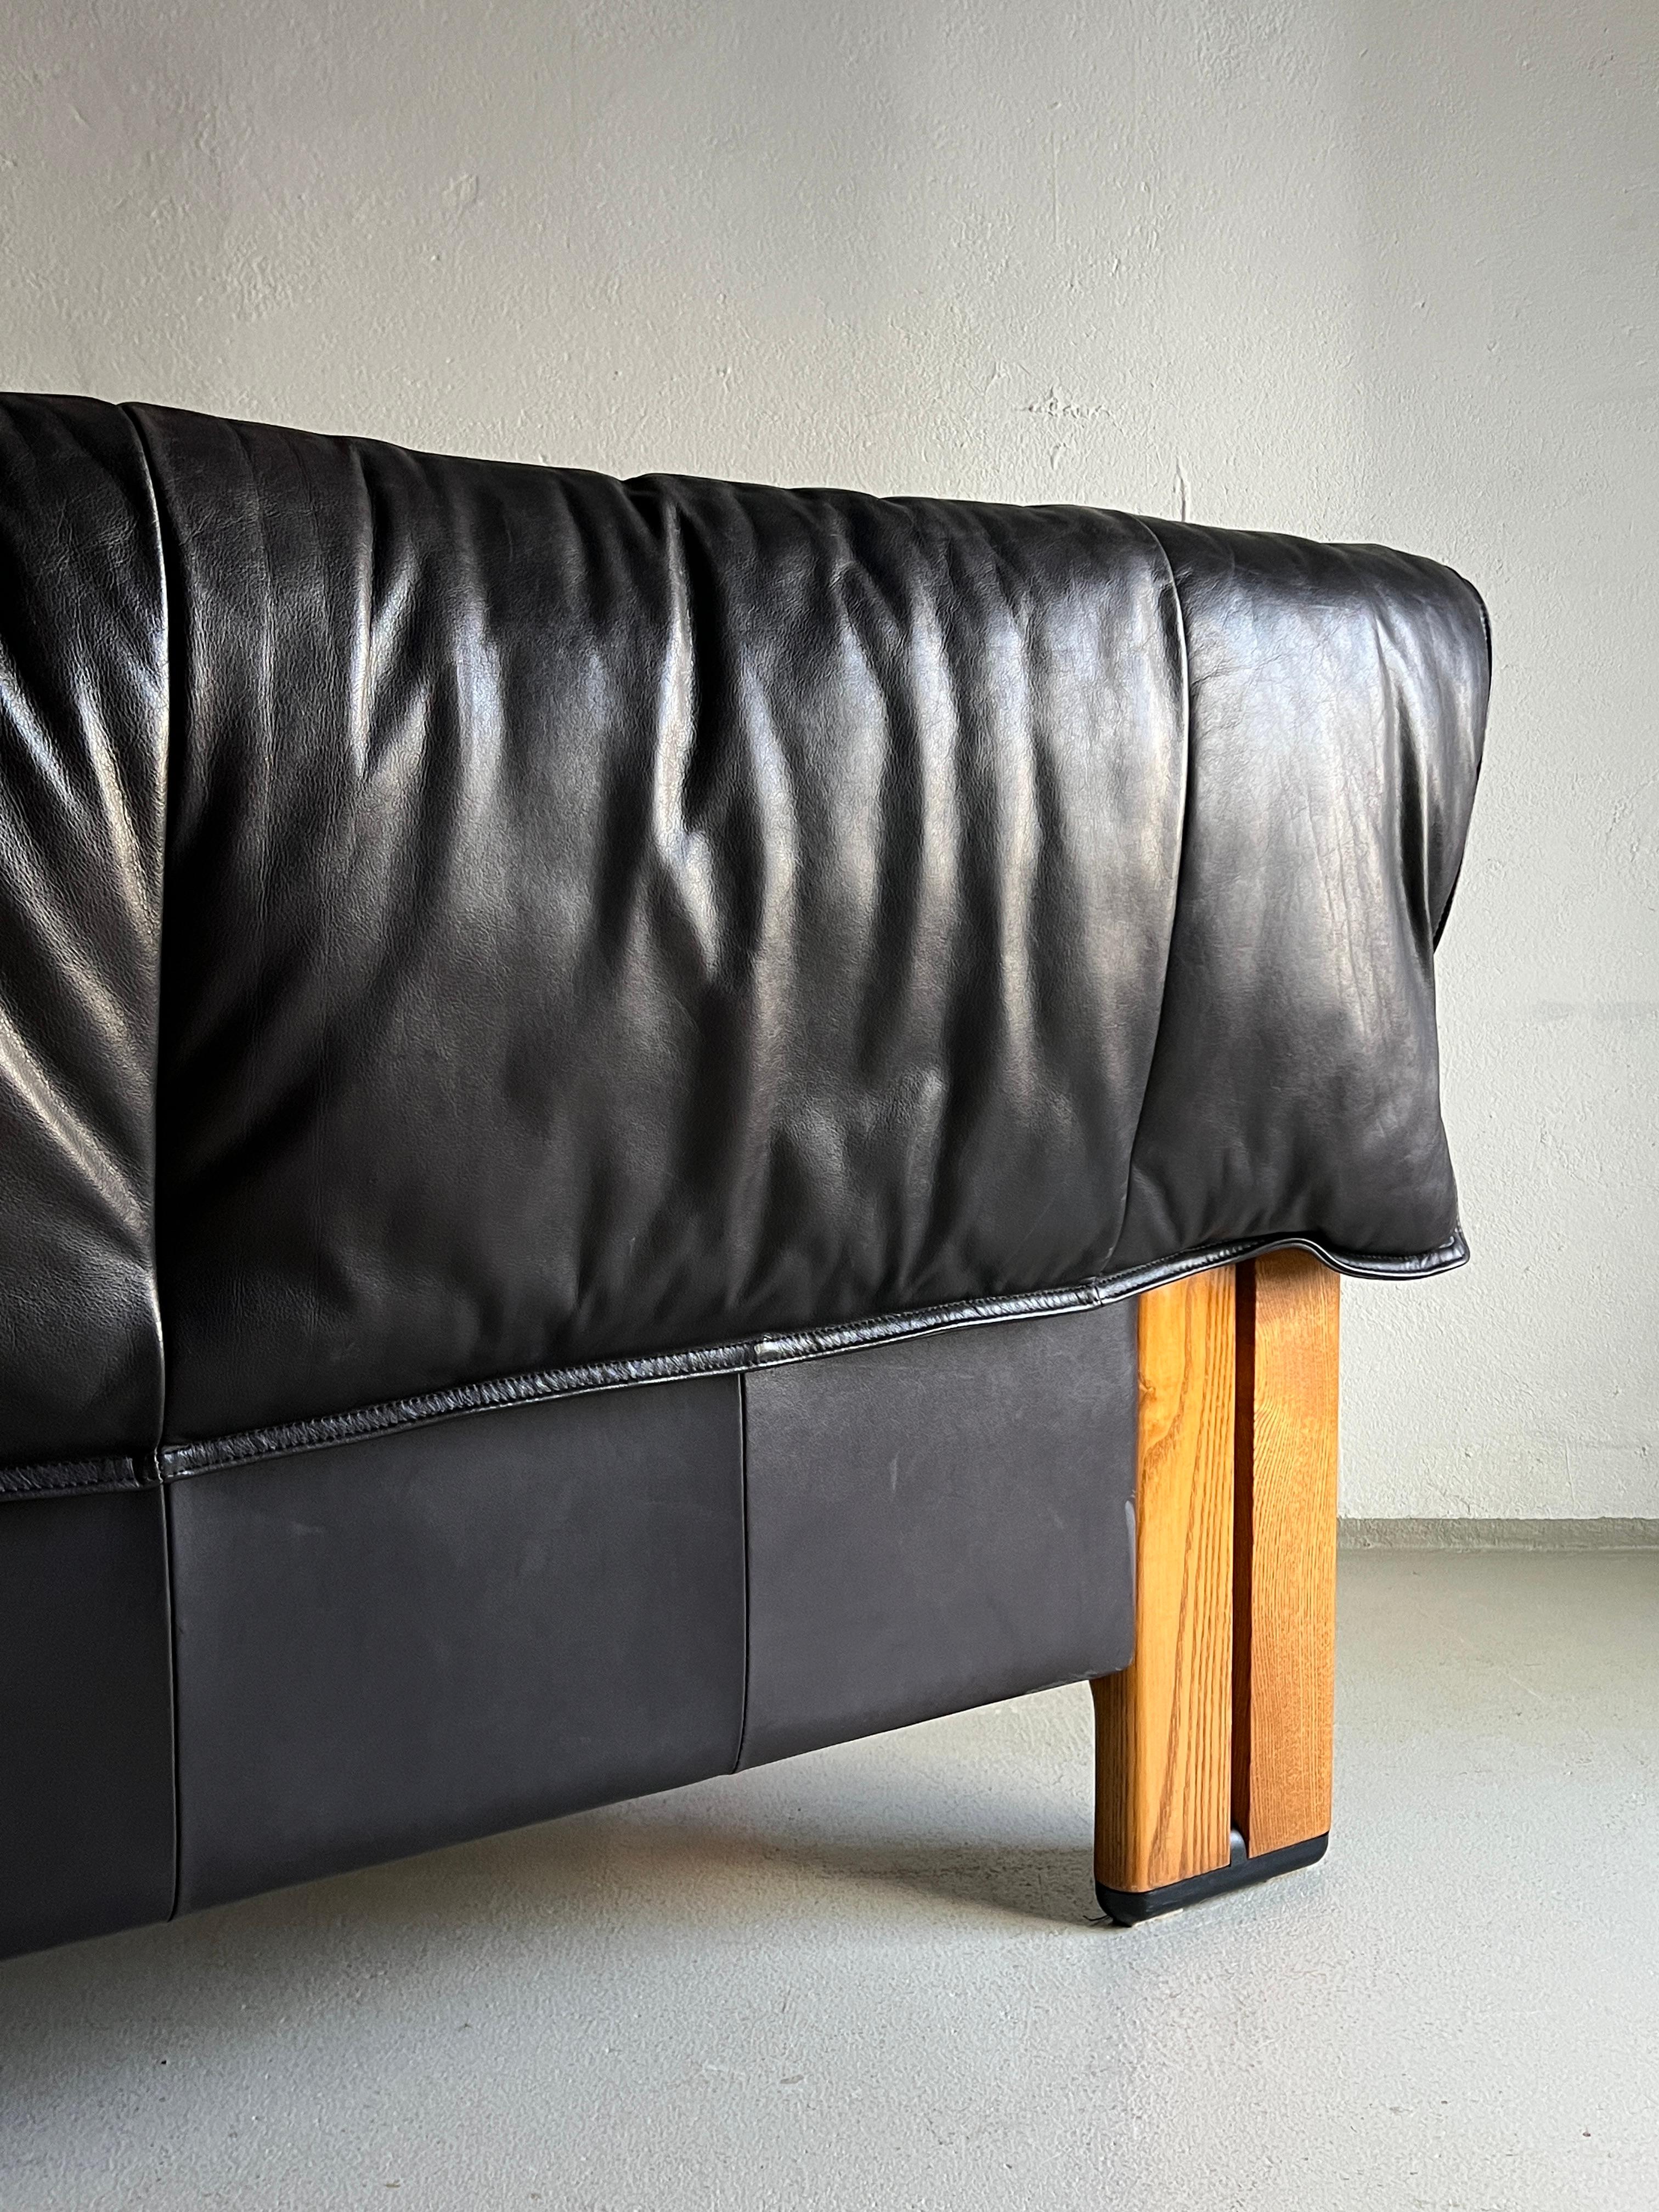 Graues 2-Sitzer-Sofa aus Buffalo-Leder mit Massivholzfuß, 1990er Jahre (20. Jahrhundert) im Angebot